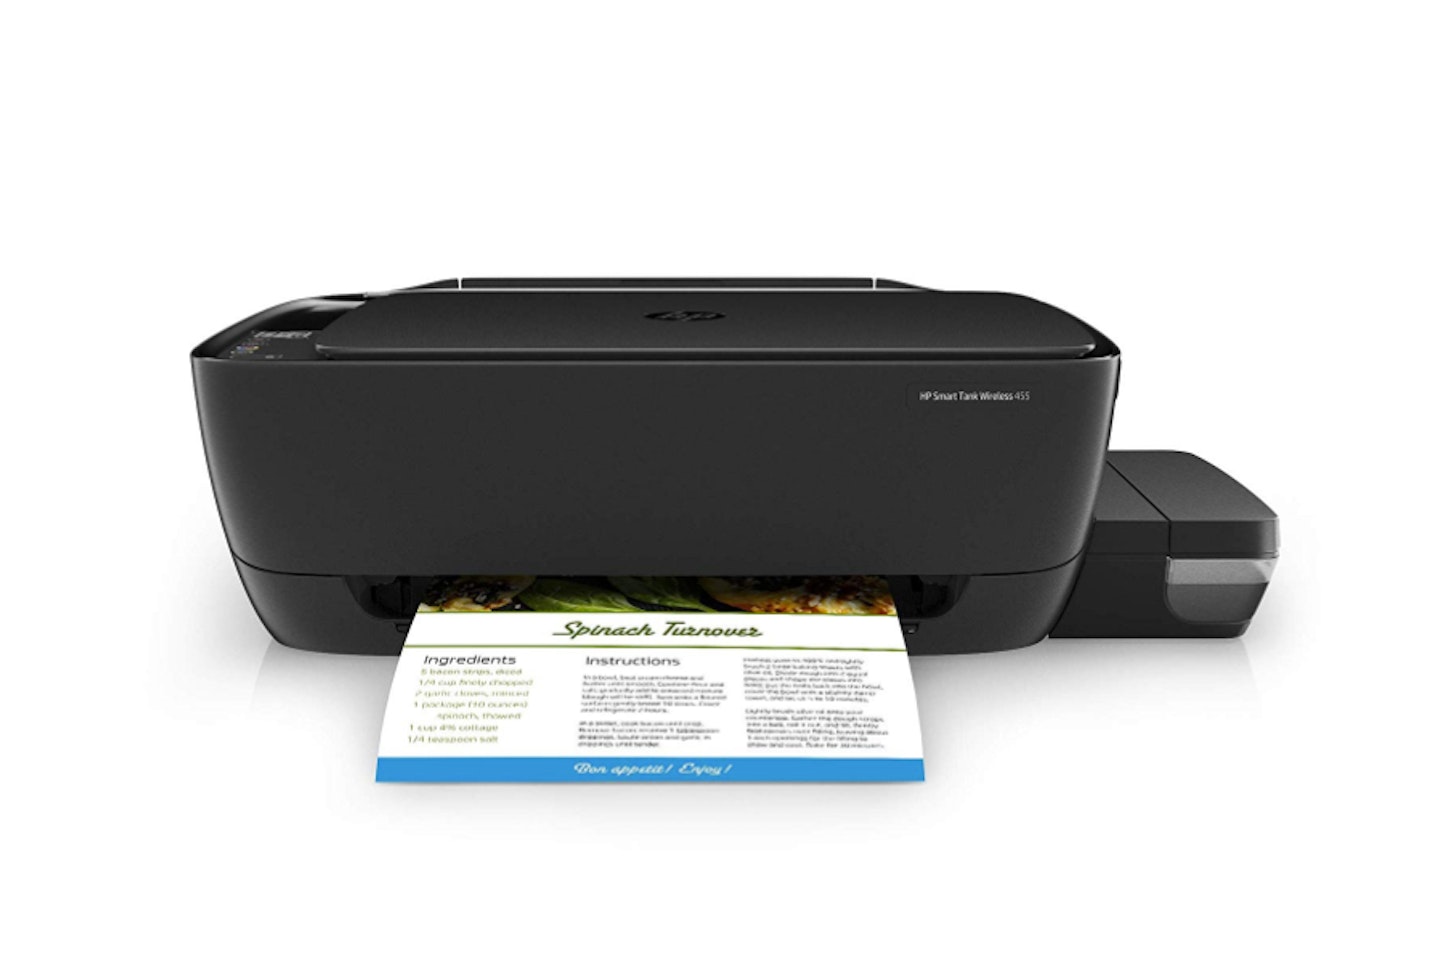 HP Smart Tank Wireless Home Printer